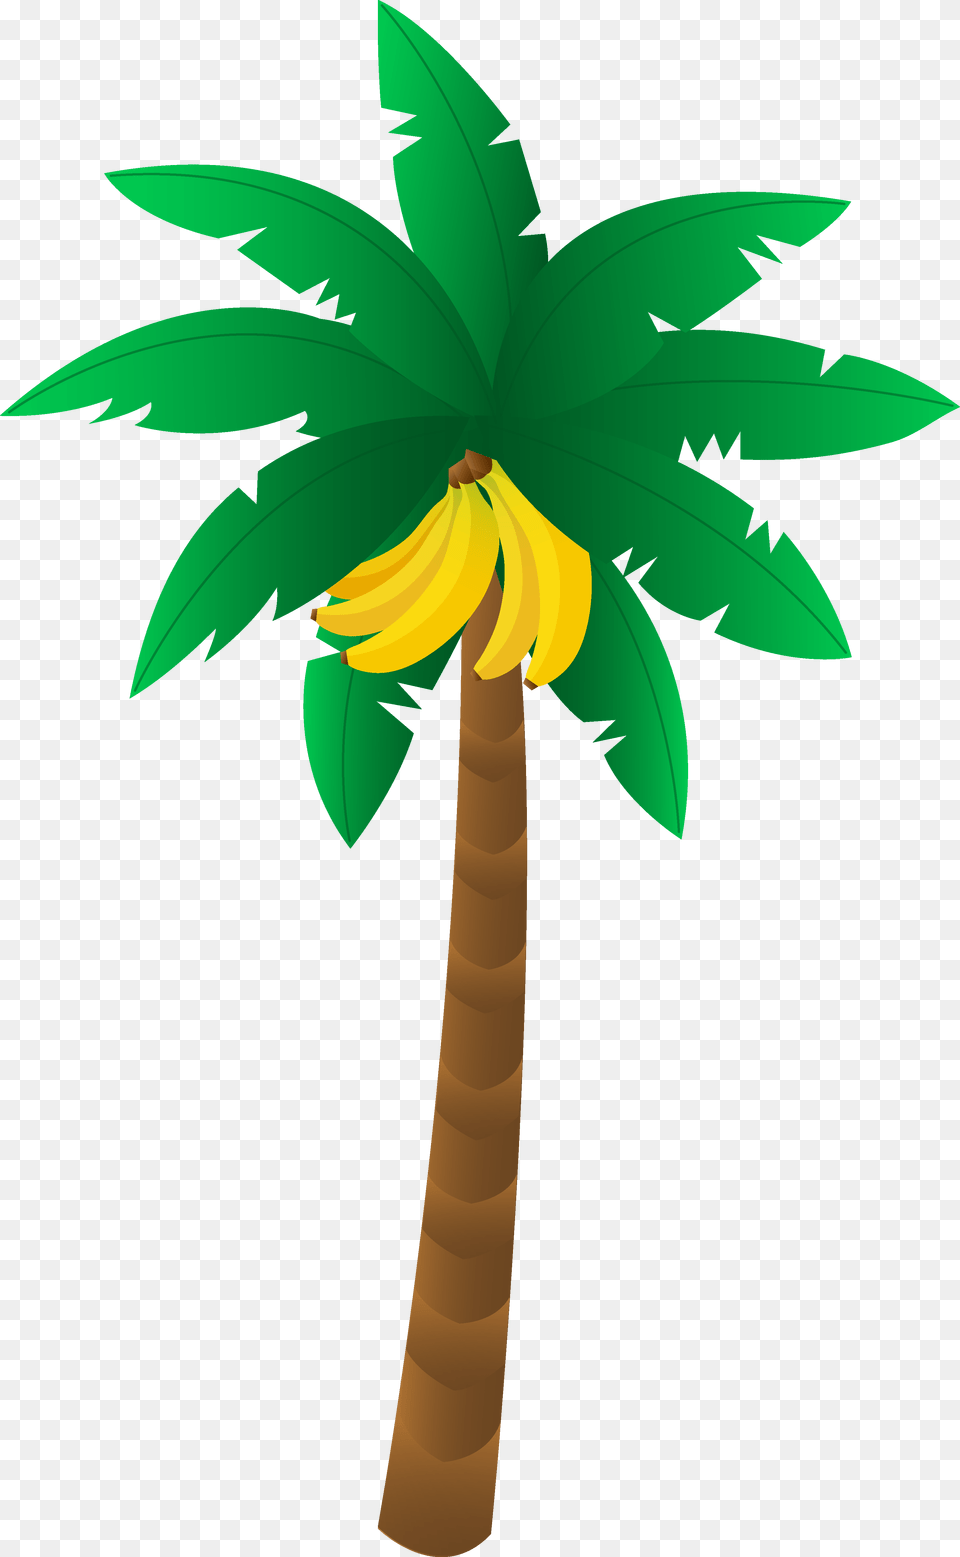 Tropical Banana Tree Banana Tree Clip Art, Palm Tree, Plant, Leaf, Cross Free Png Download